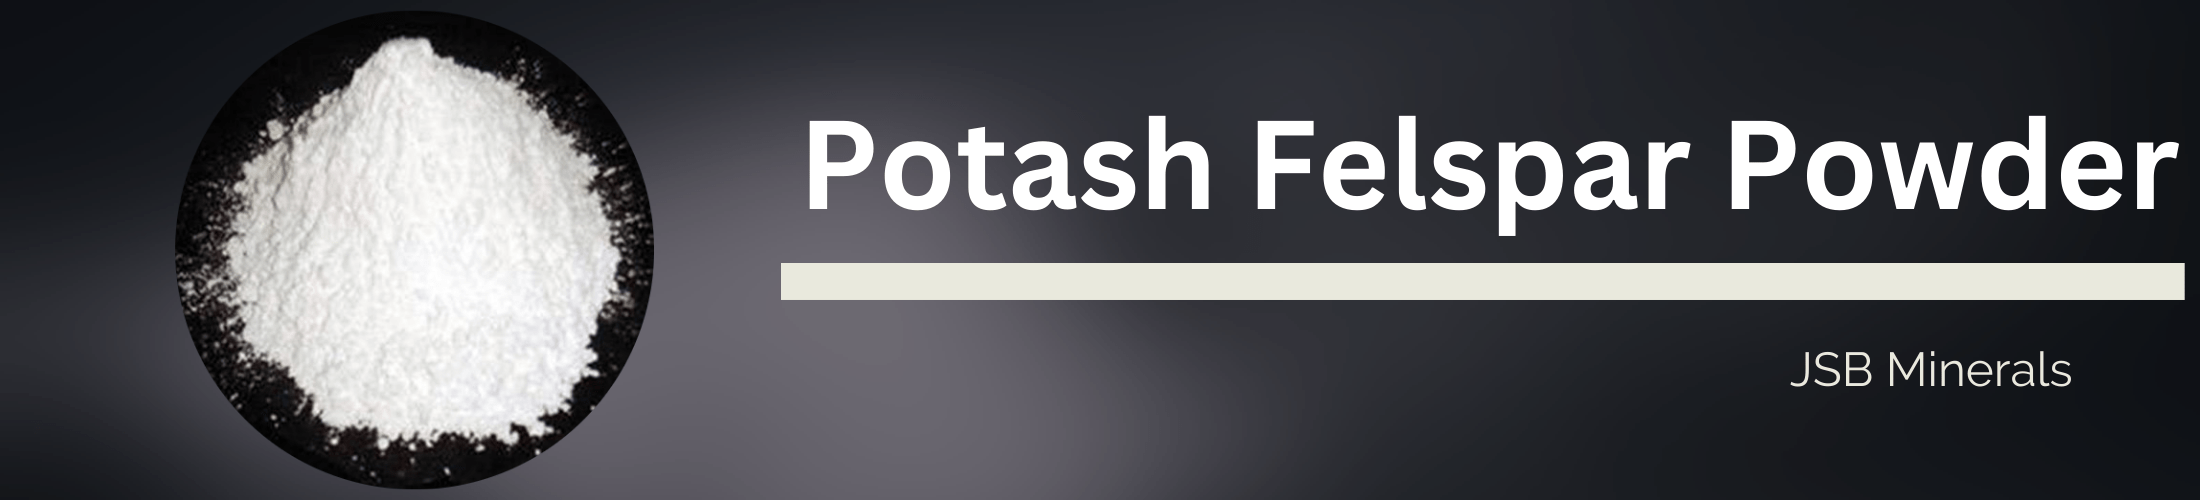 Potash Felspar Powder